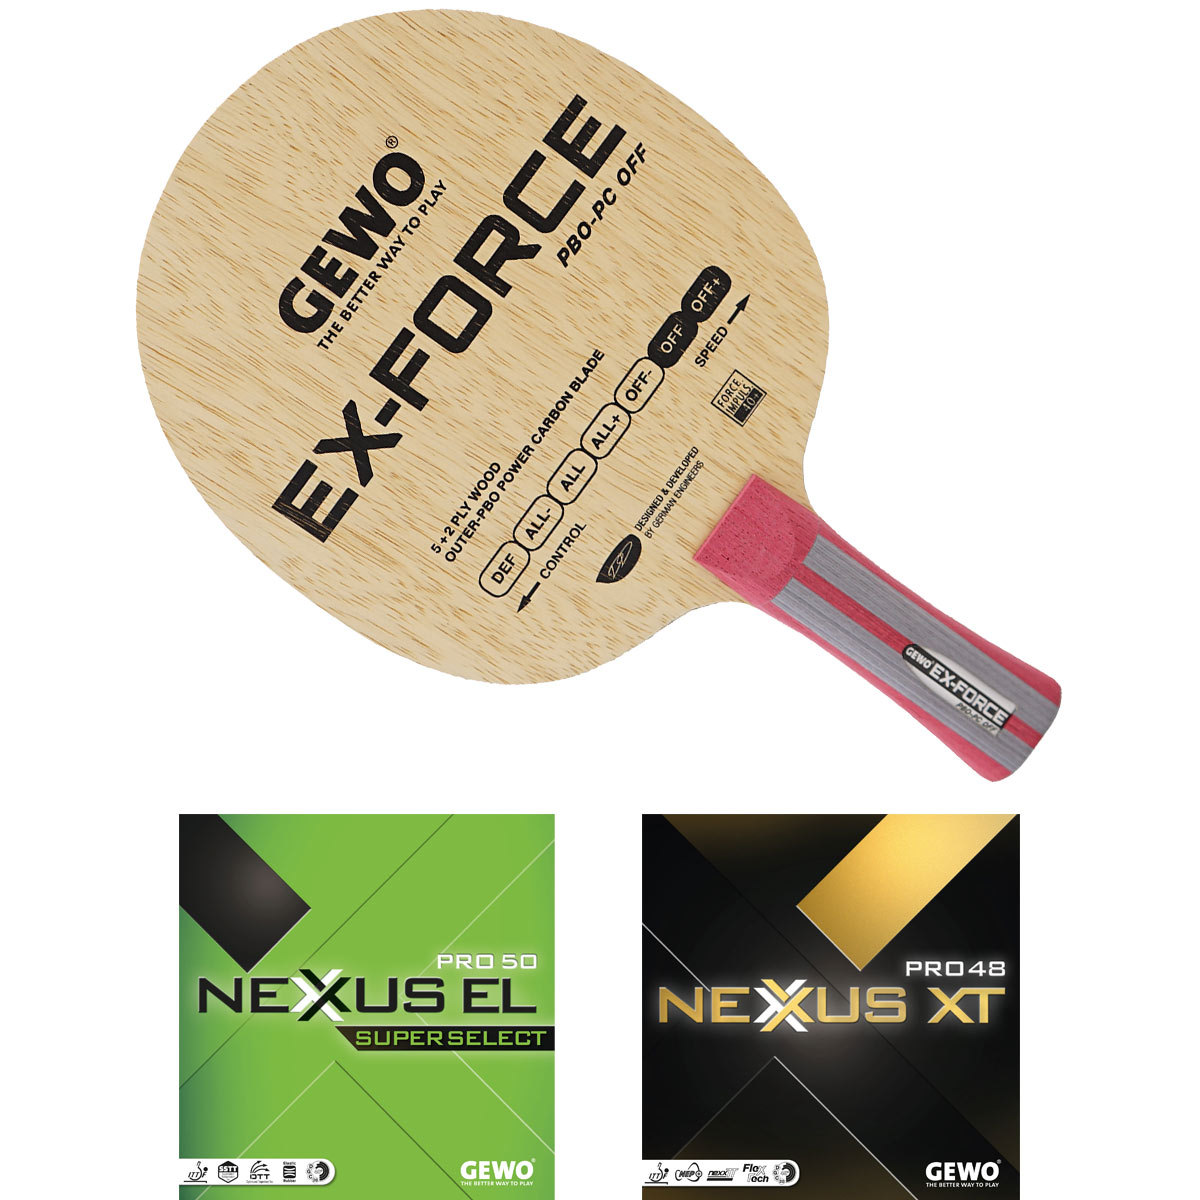 GEWO Bat: Blade Ex-Force PBO-PC  with Nexxus EL Pro50SupSel + Nexxus XT Pro48